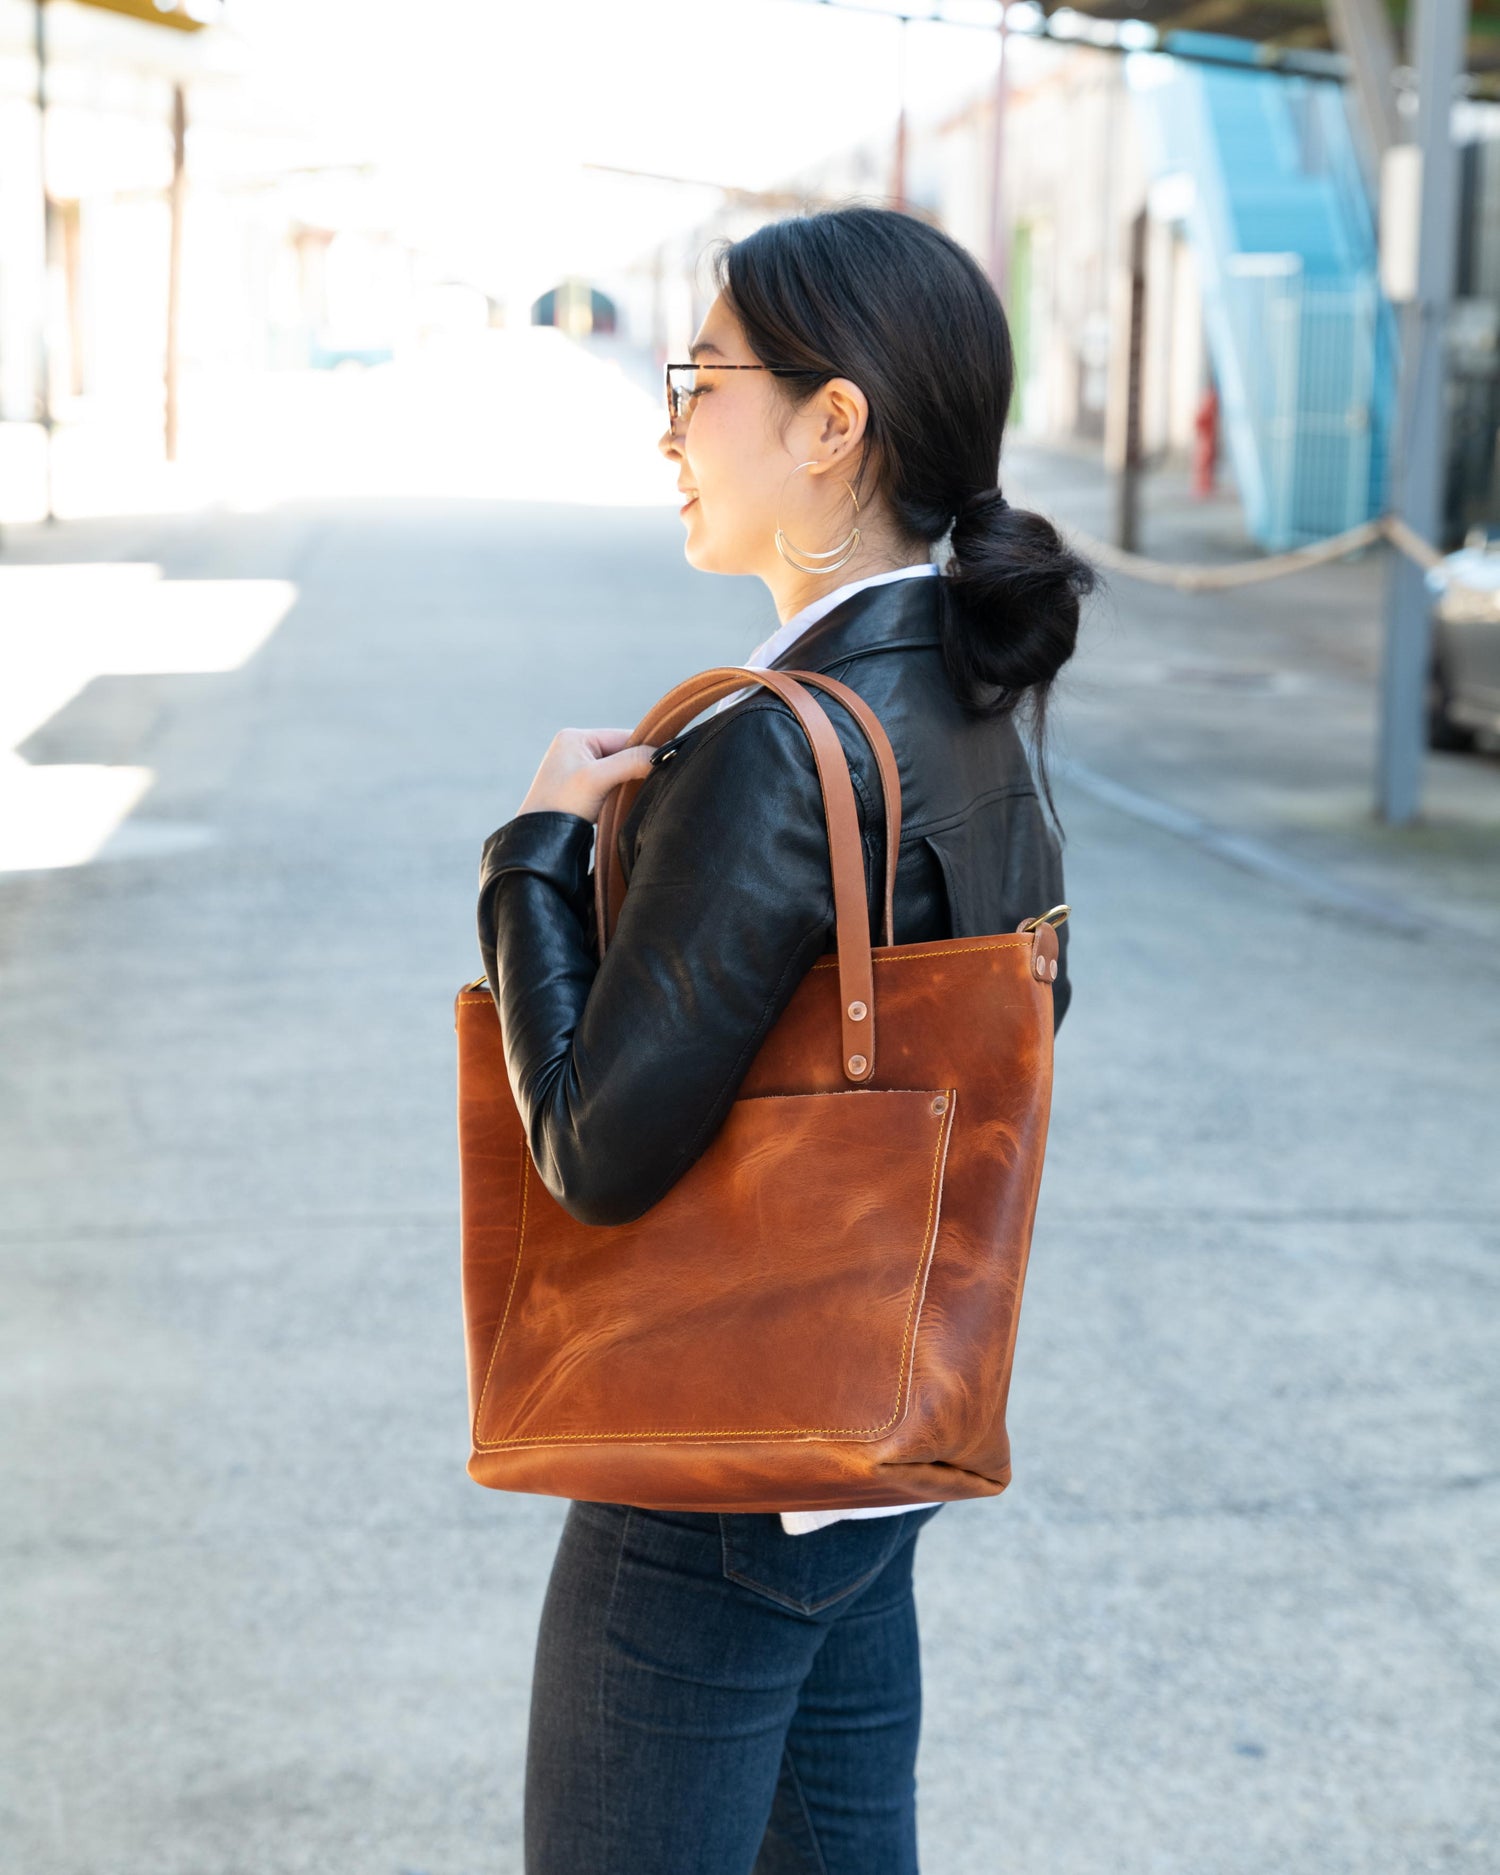 Unique Denim Handbags | Handmade Leather Bags | She-Bang Shop